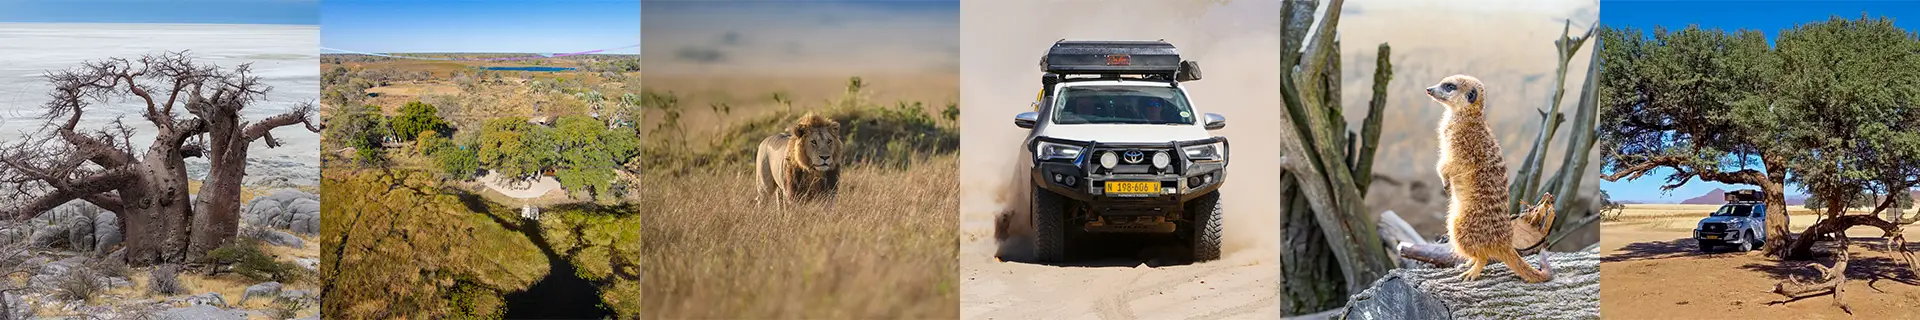 Self-Drive-Safari-4x4-Car-Hire-Botswana-Route-Back-to-Basics